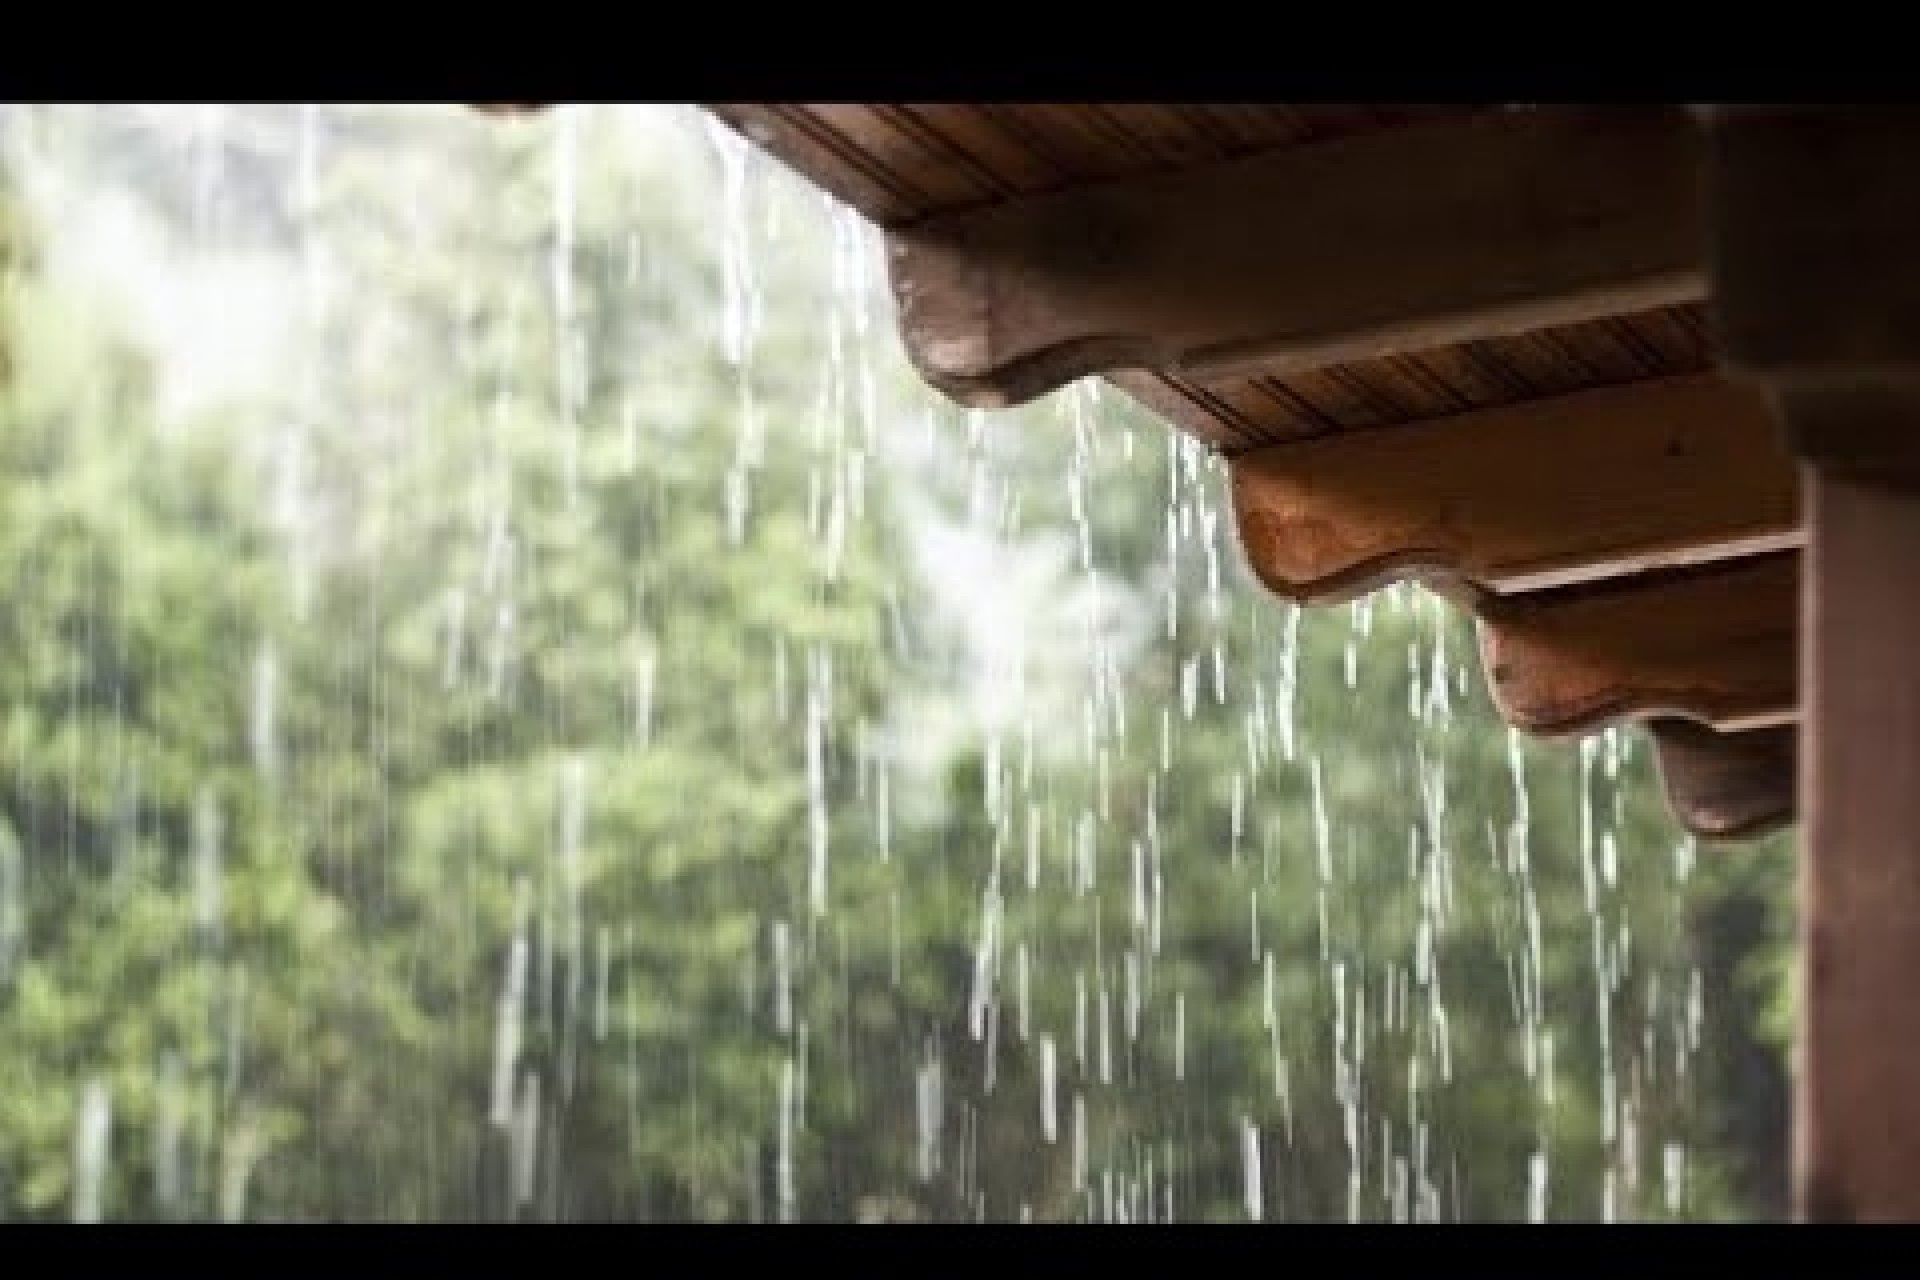 Missal registra mais de 130 mm de chuva nesta sexta-feira